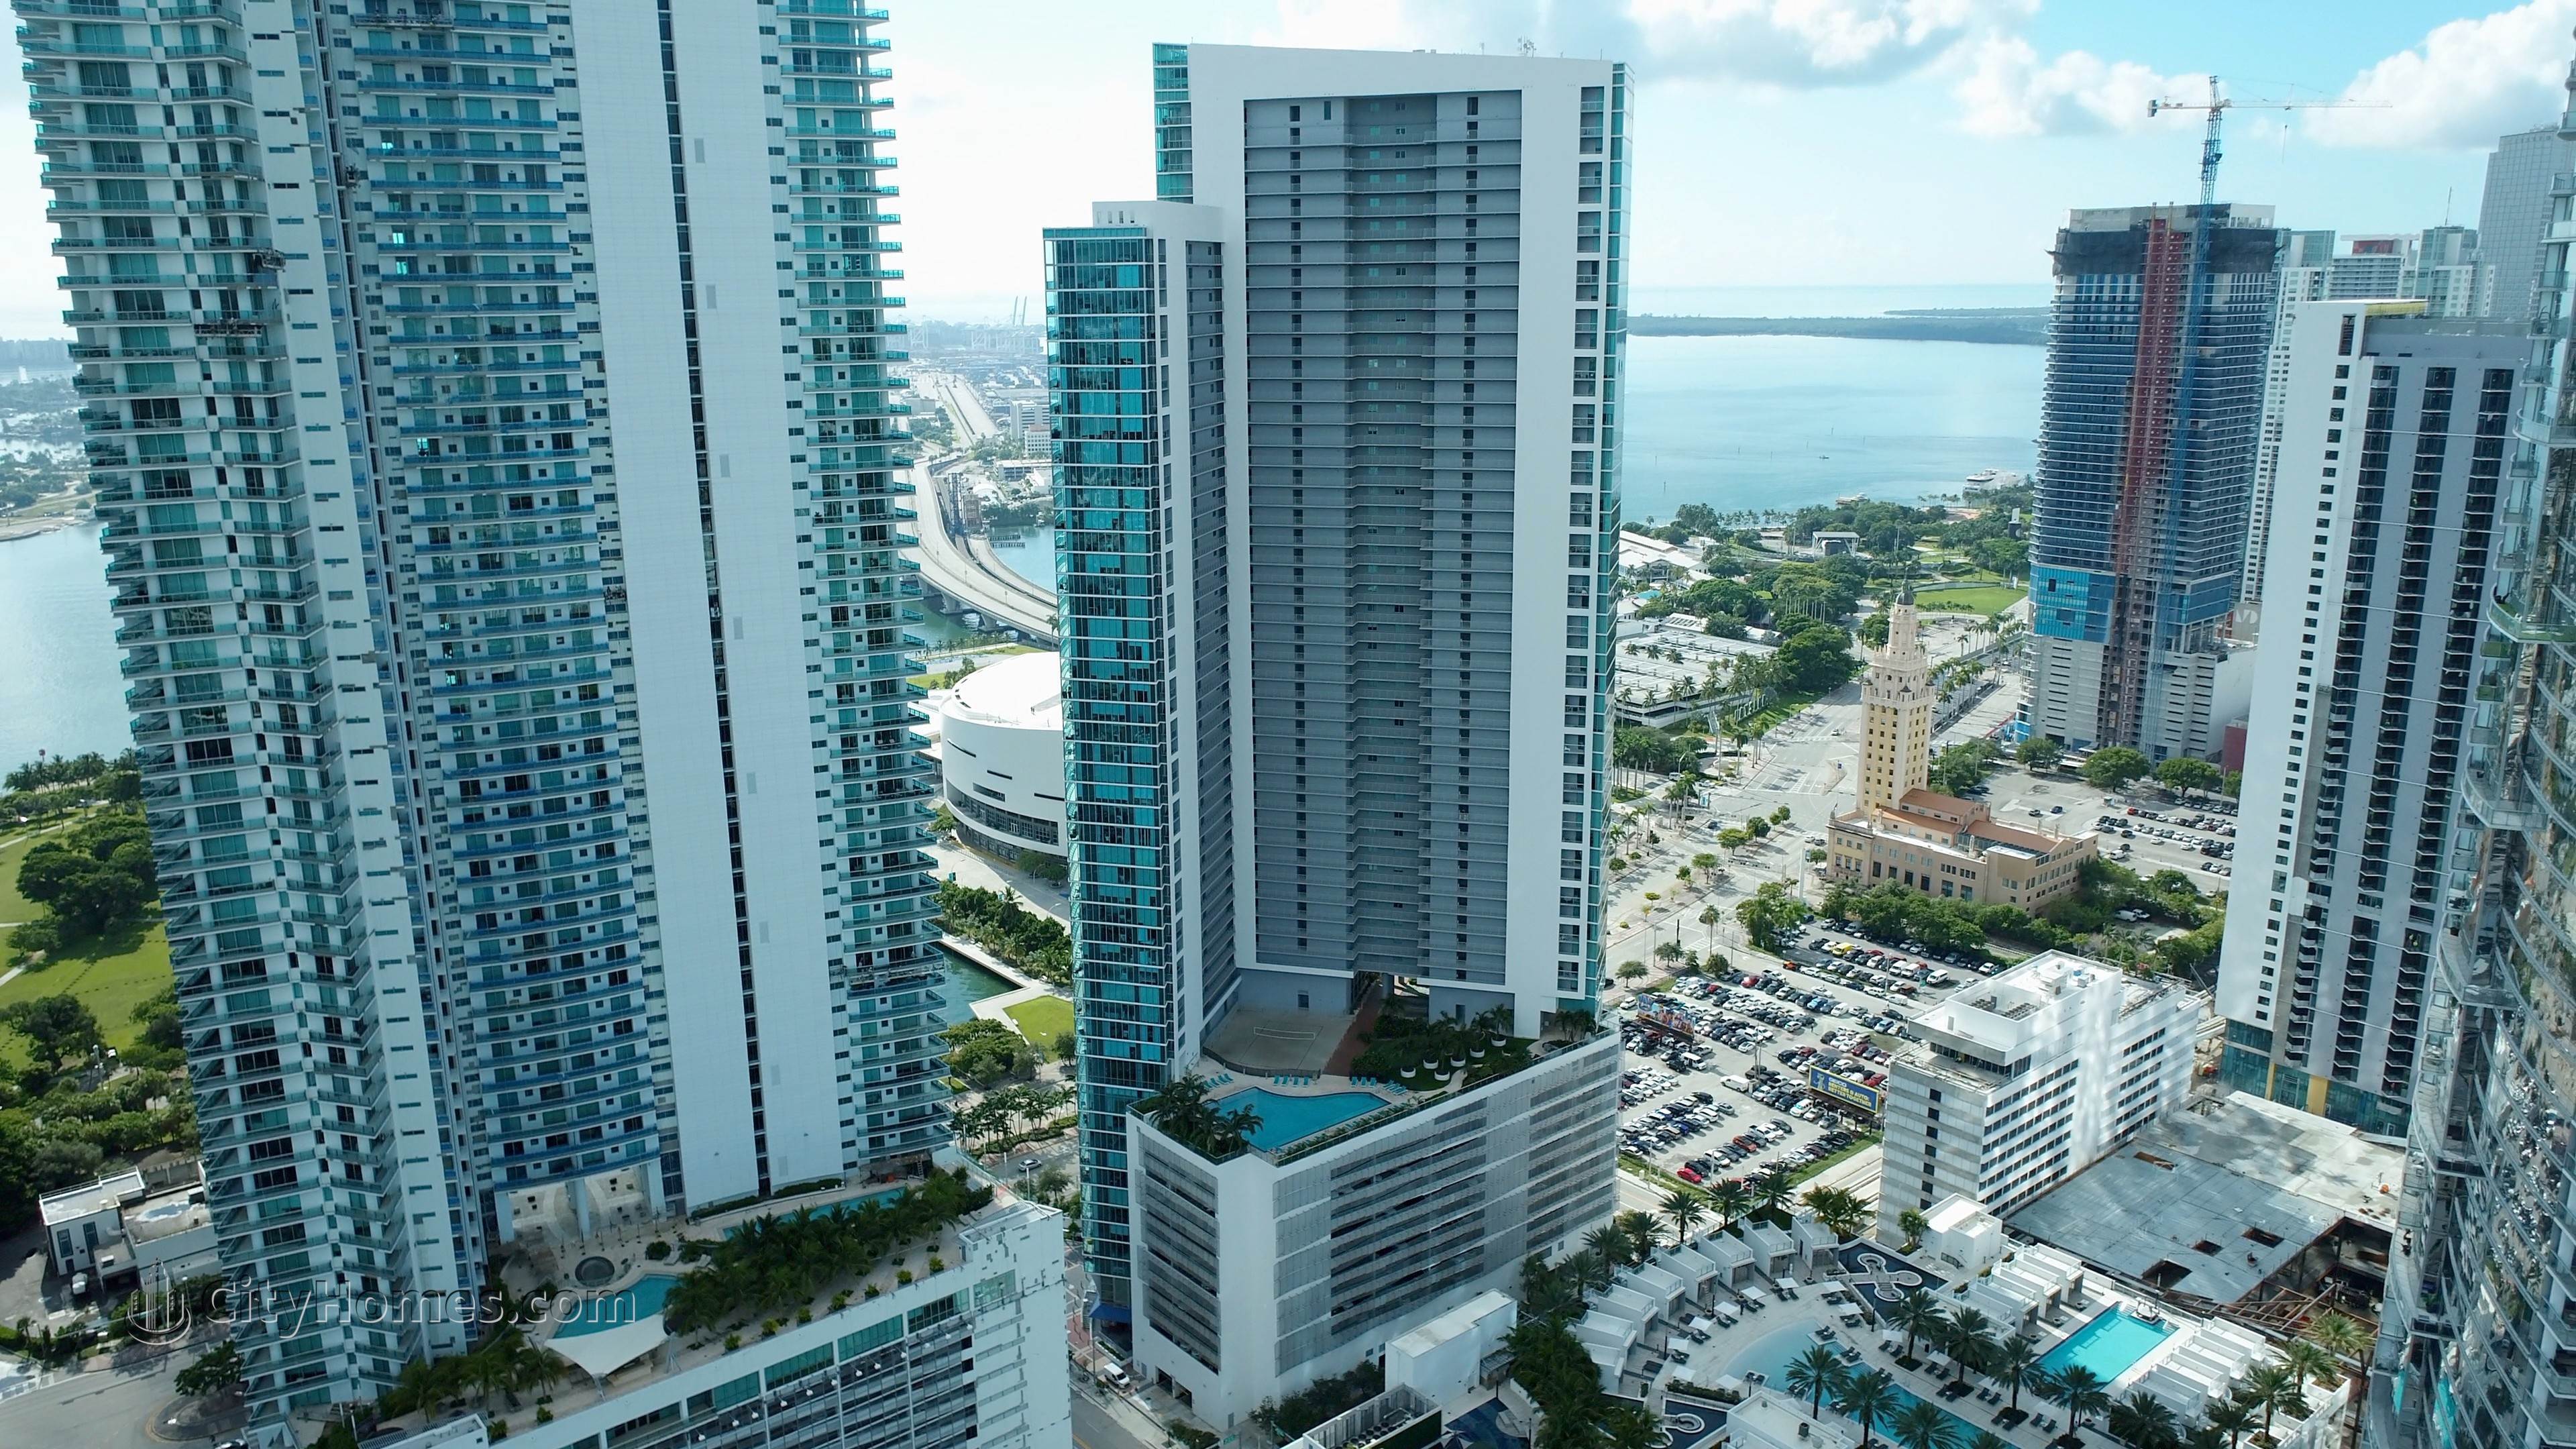 3. 900 Biscayne Bay建於 900 Biscayne Boulevard, Miami, FL 33132